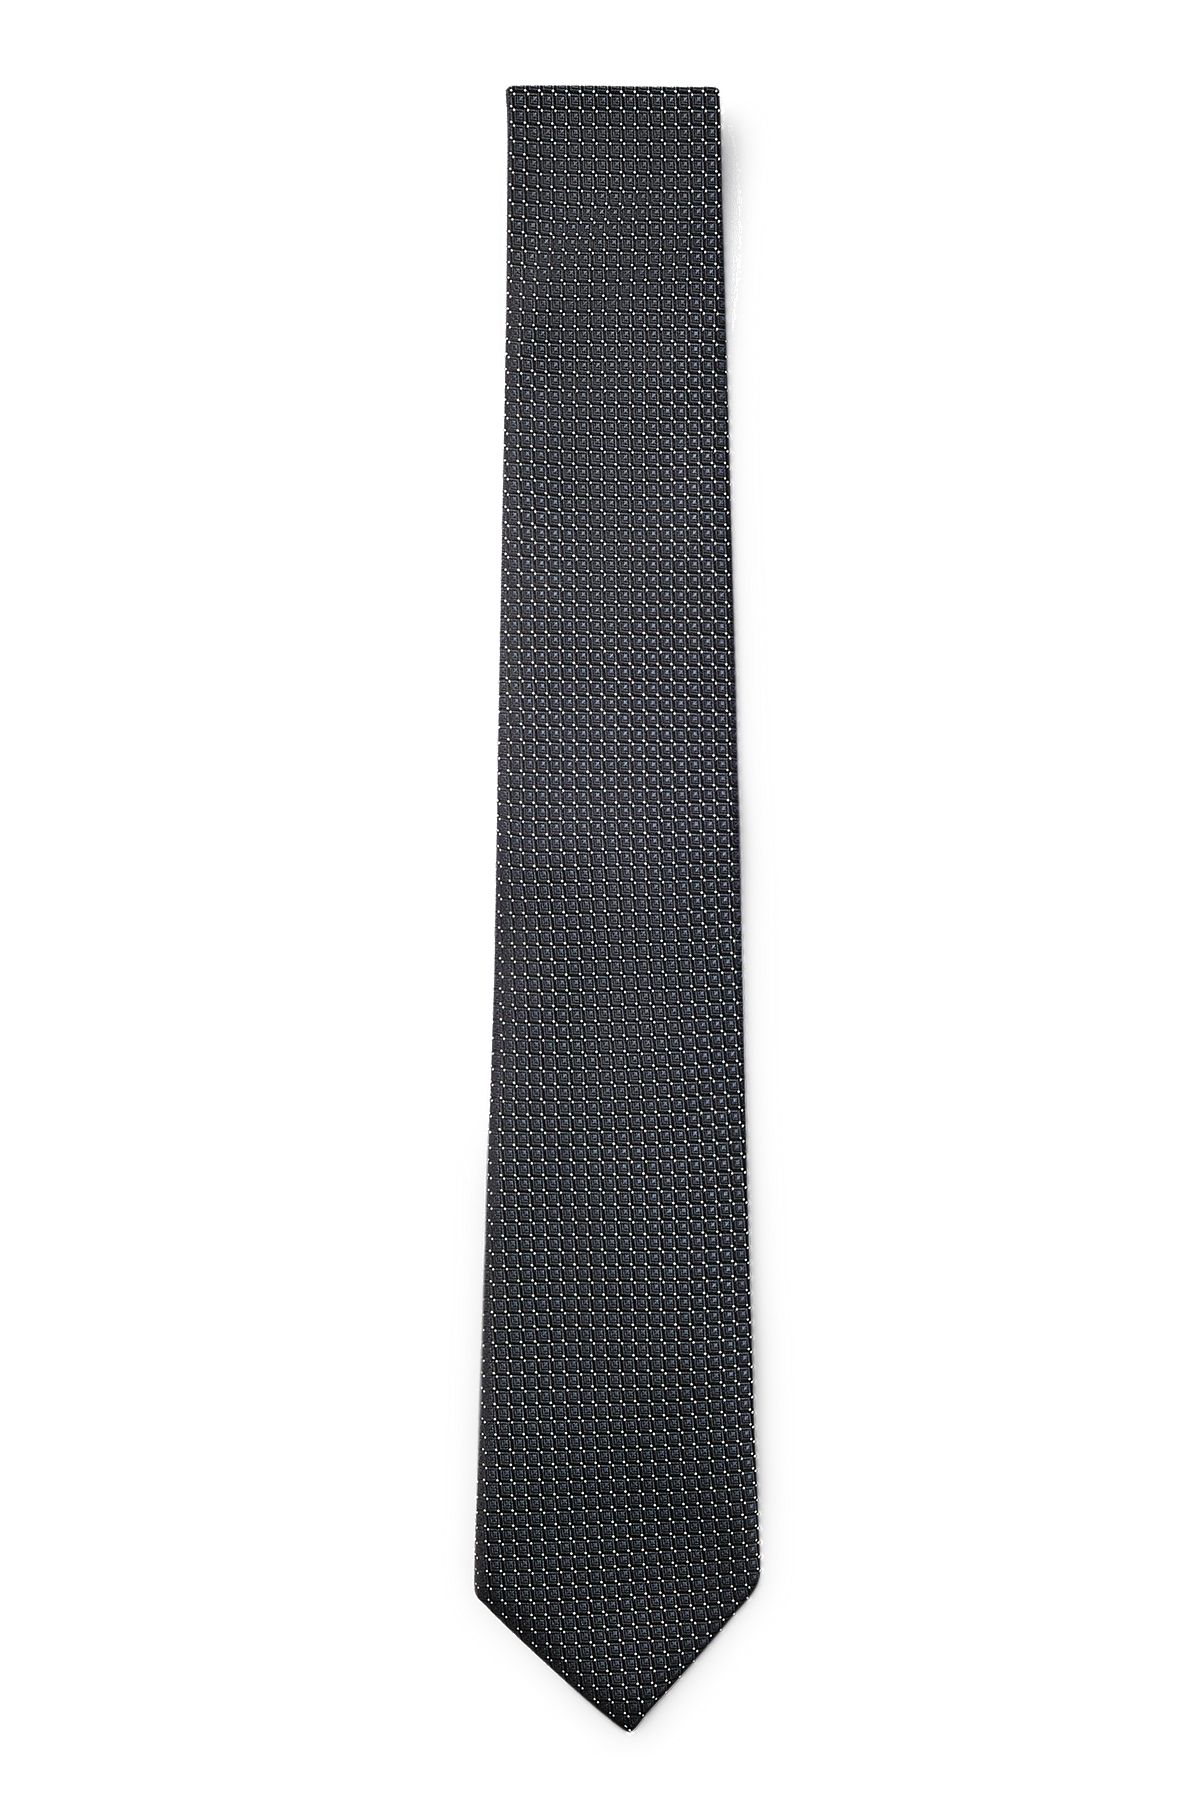 Krawatte aus Seiden-Jacquard mit feinem Allover-Muster, Dunkelgrau